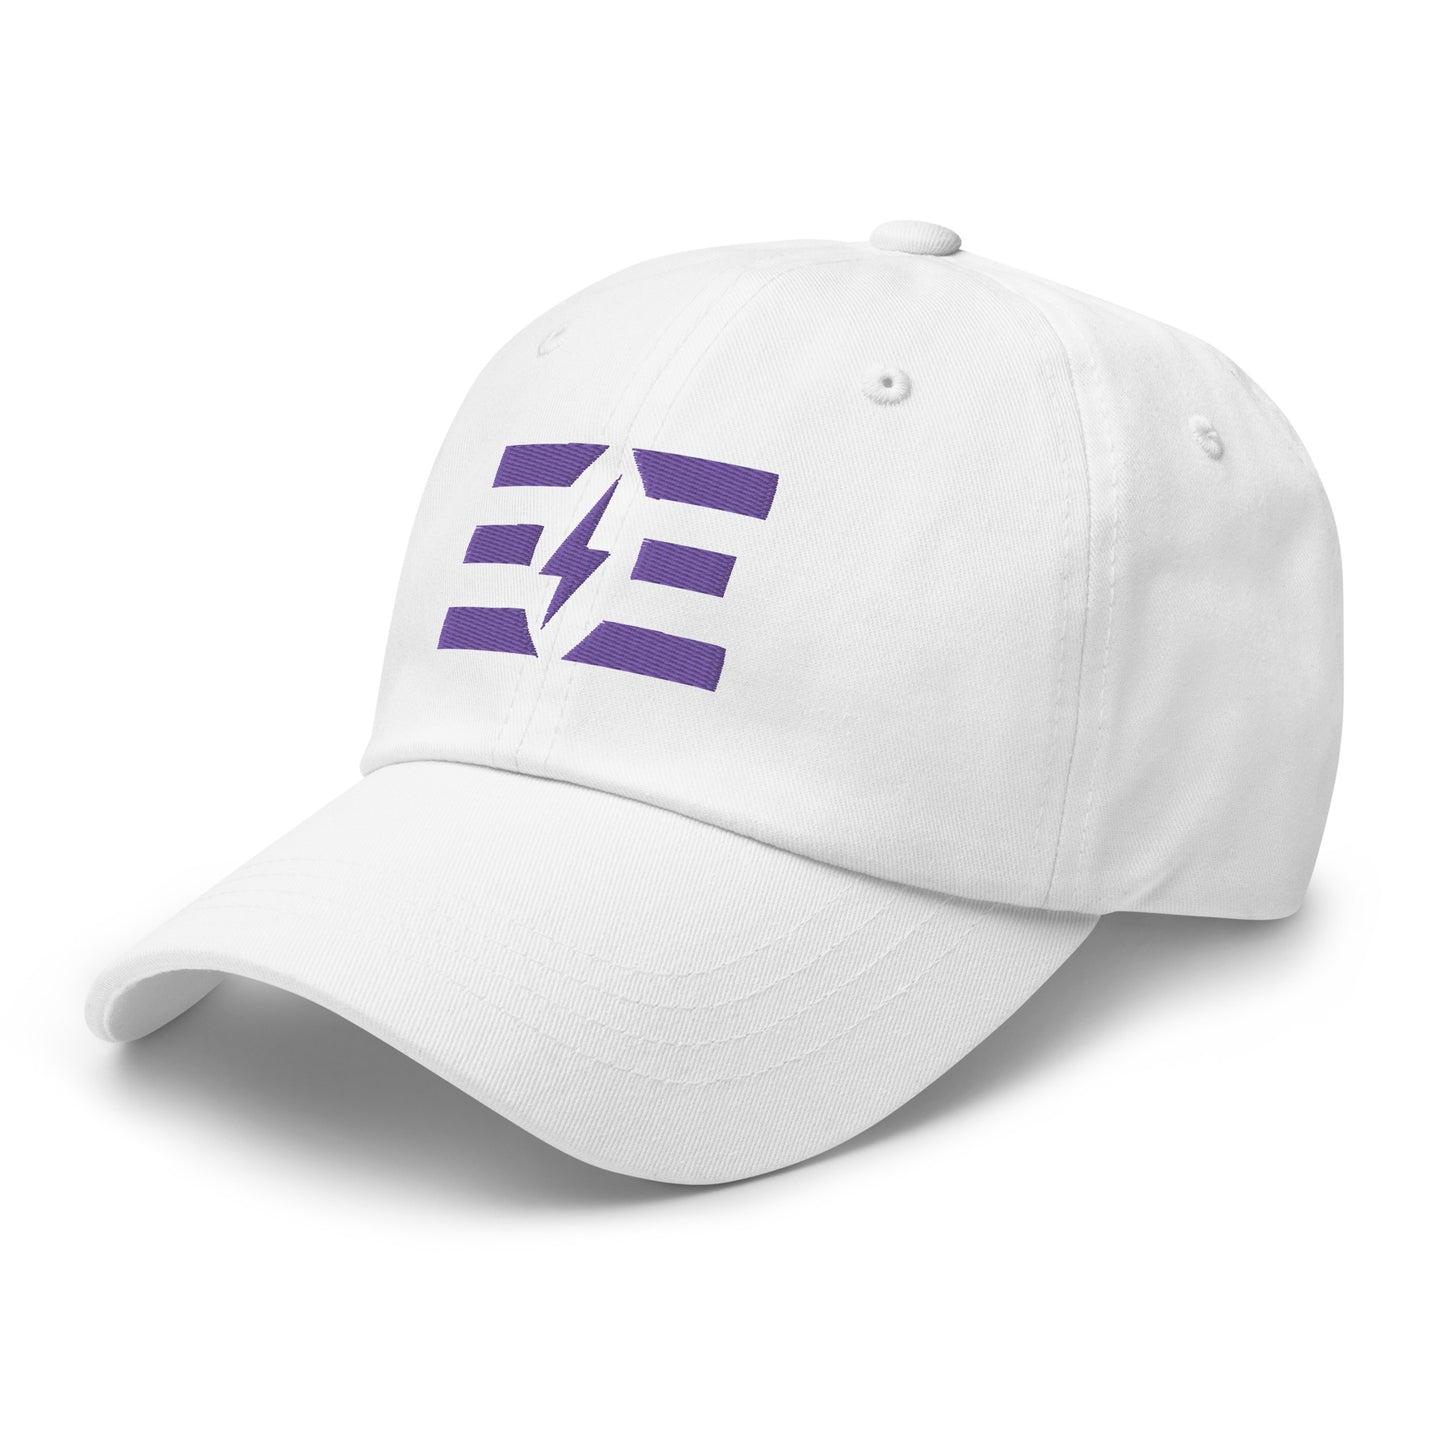 Endurance eSports Dad hat - Purple